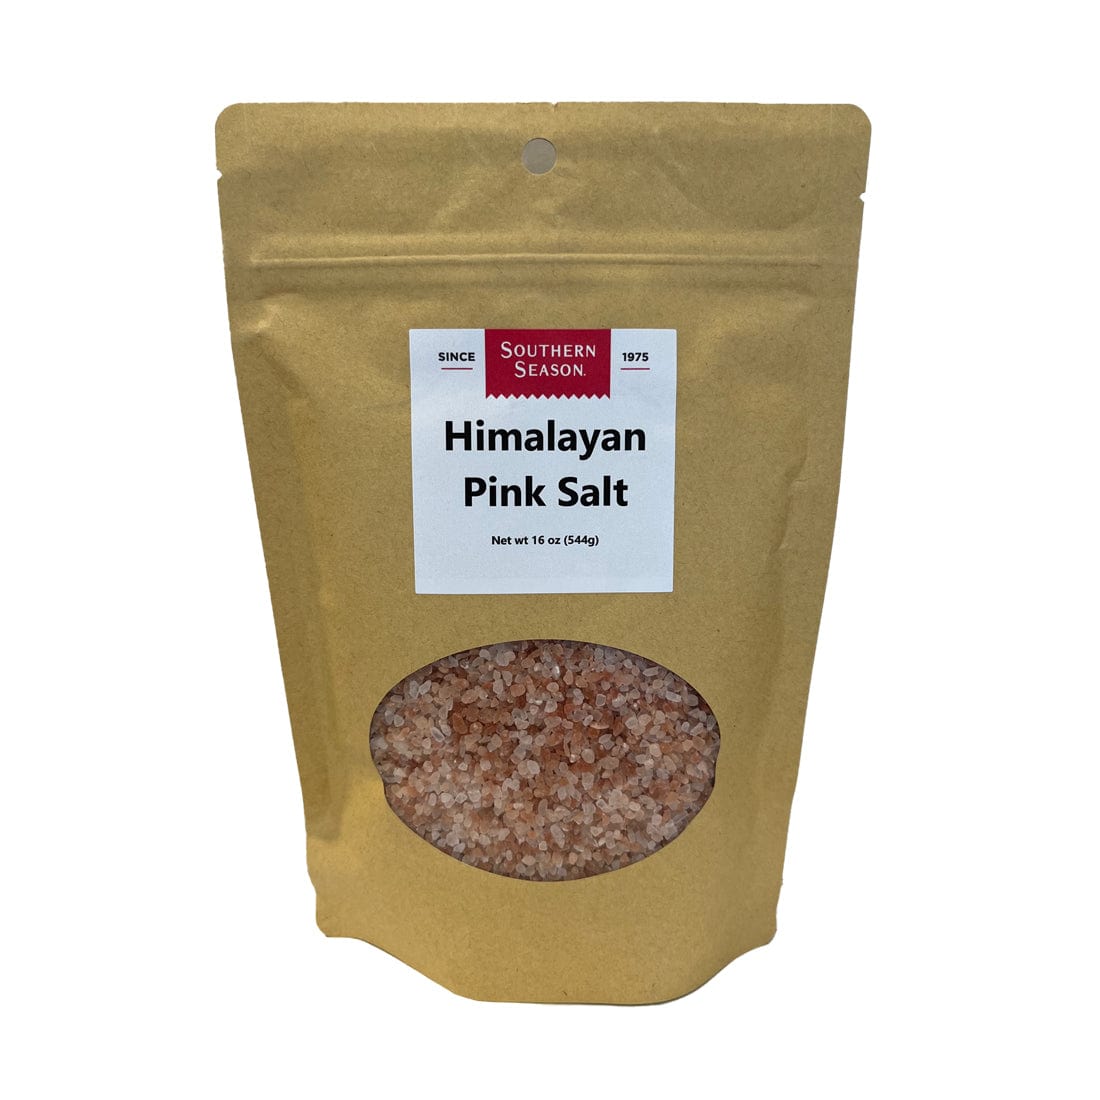 Southern Season Spices & Seasonings Himalayan Pink Salt 16 oz